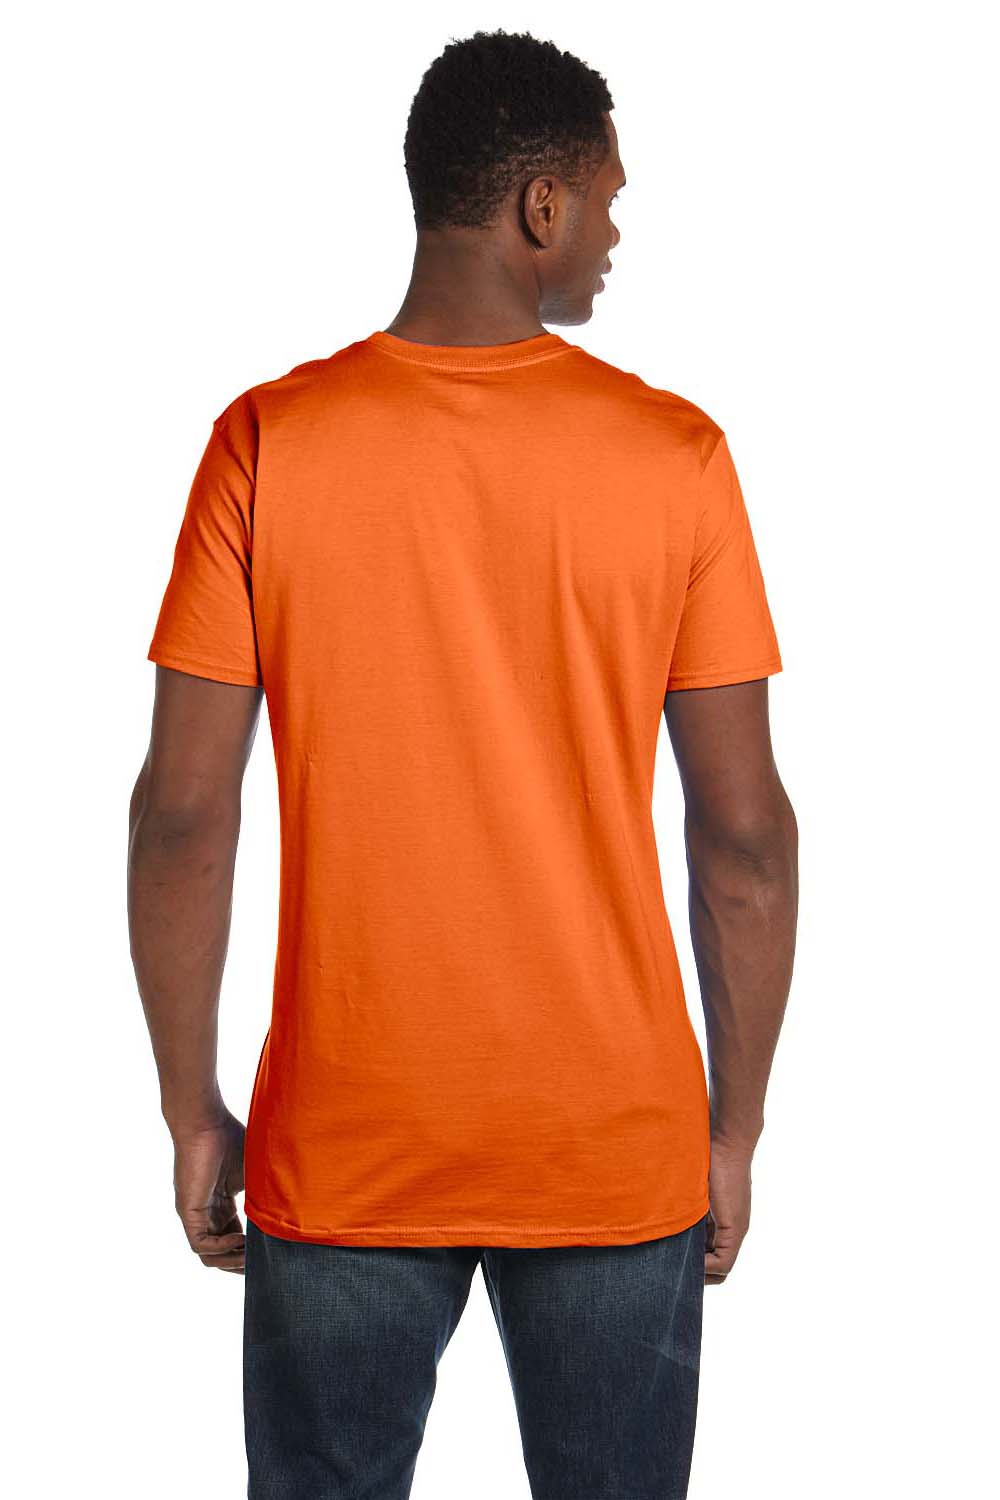 Hanes 4980 Mens Nano-T Short Sleeve Crewneck T-Shirt Orange Back